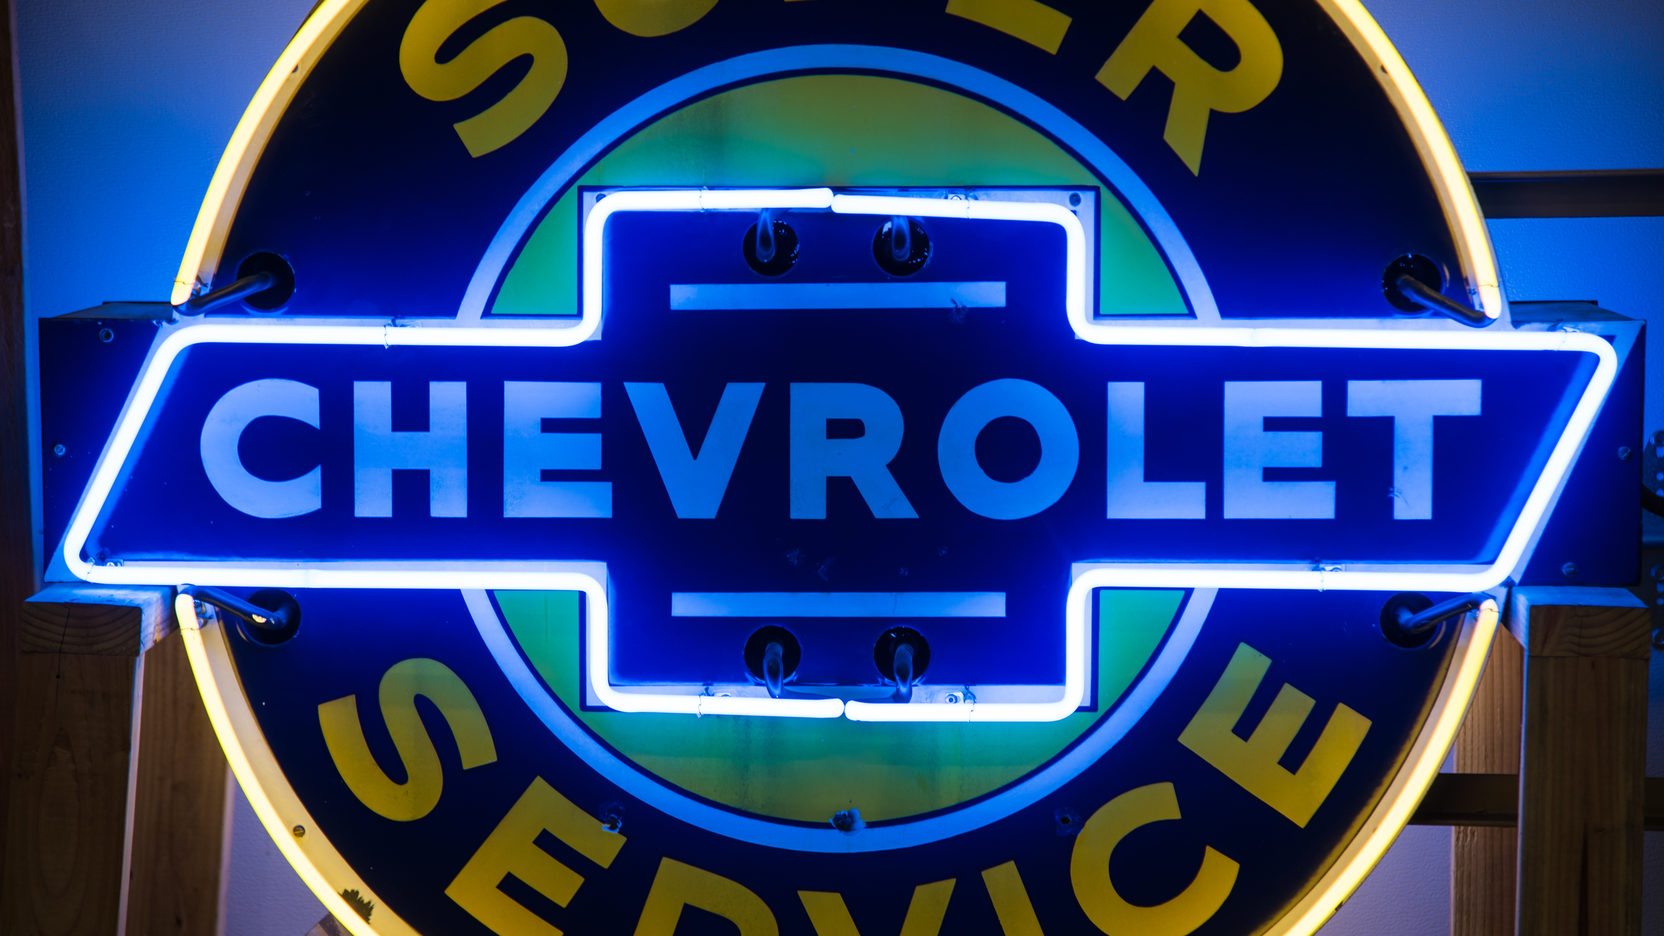 Chevrolet Dealership How to get chevrolet dealership certified